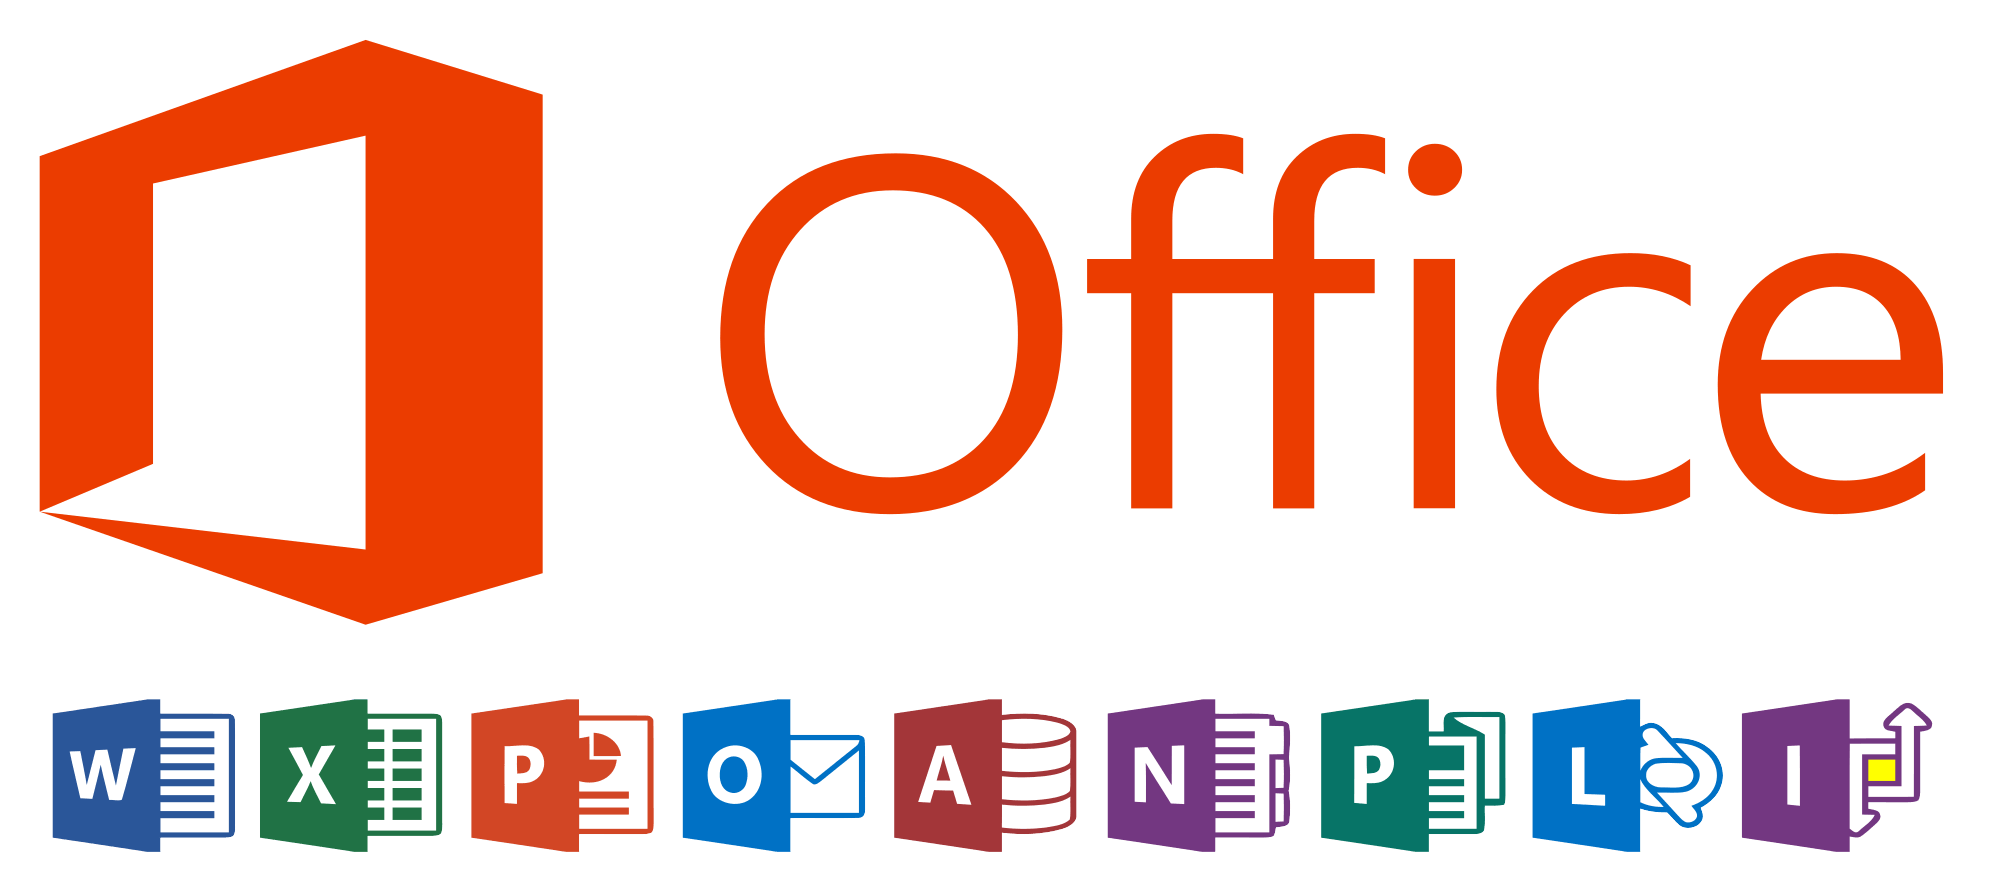 Microsoft Office Logo - File:2018 Microsoft Office logos.svg - Wikimedia Commons